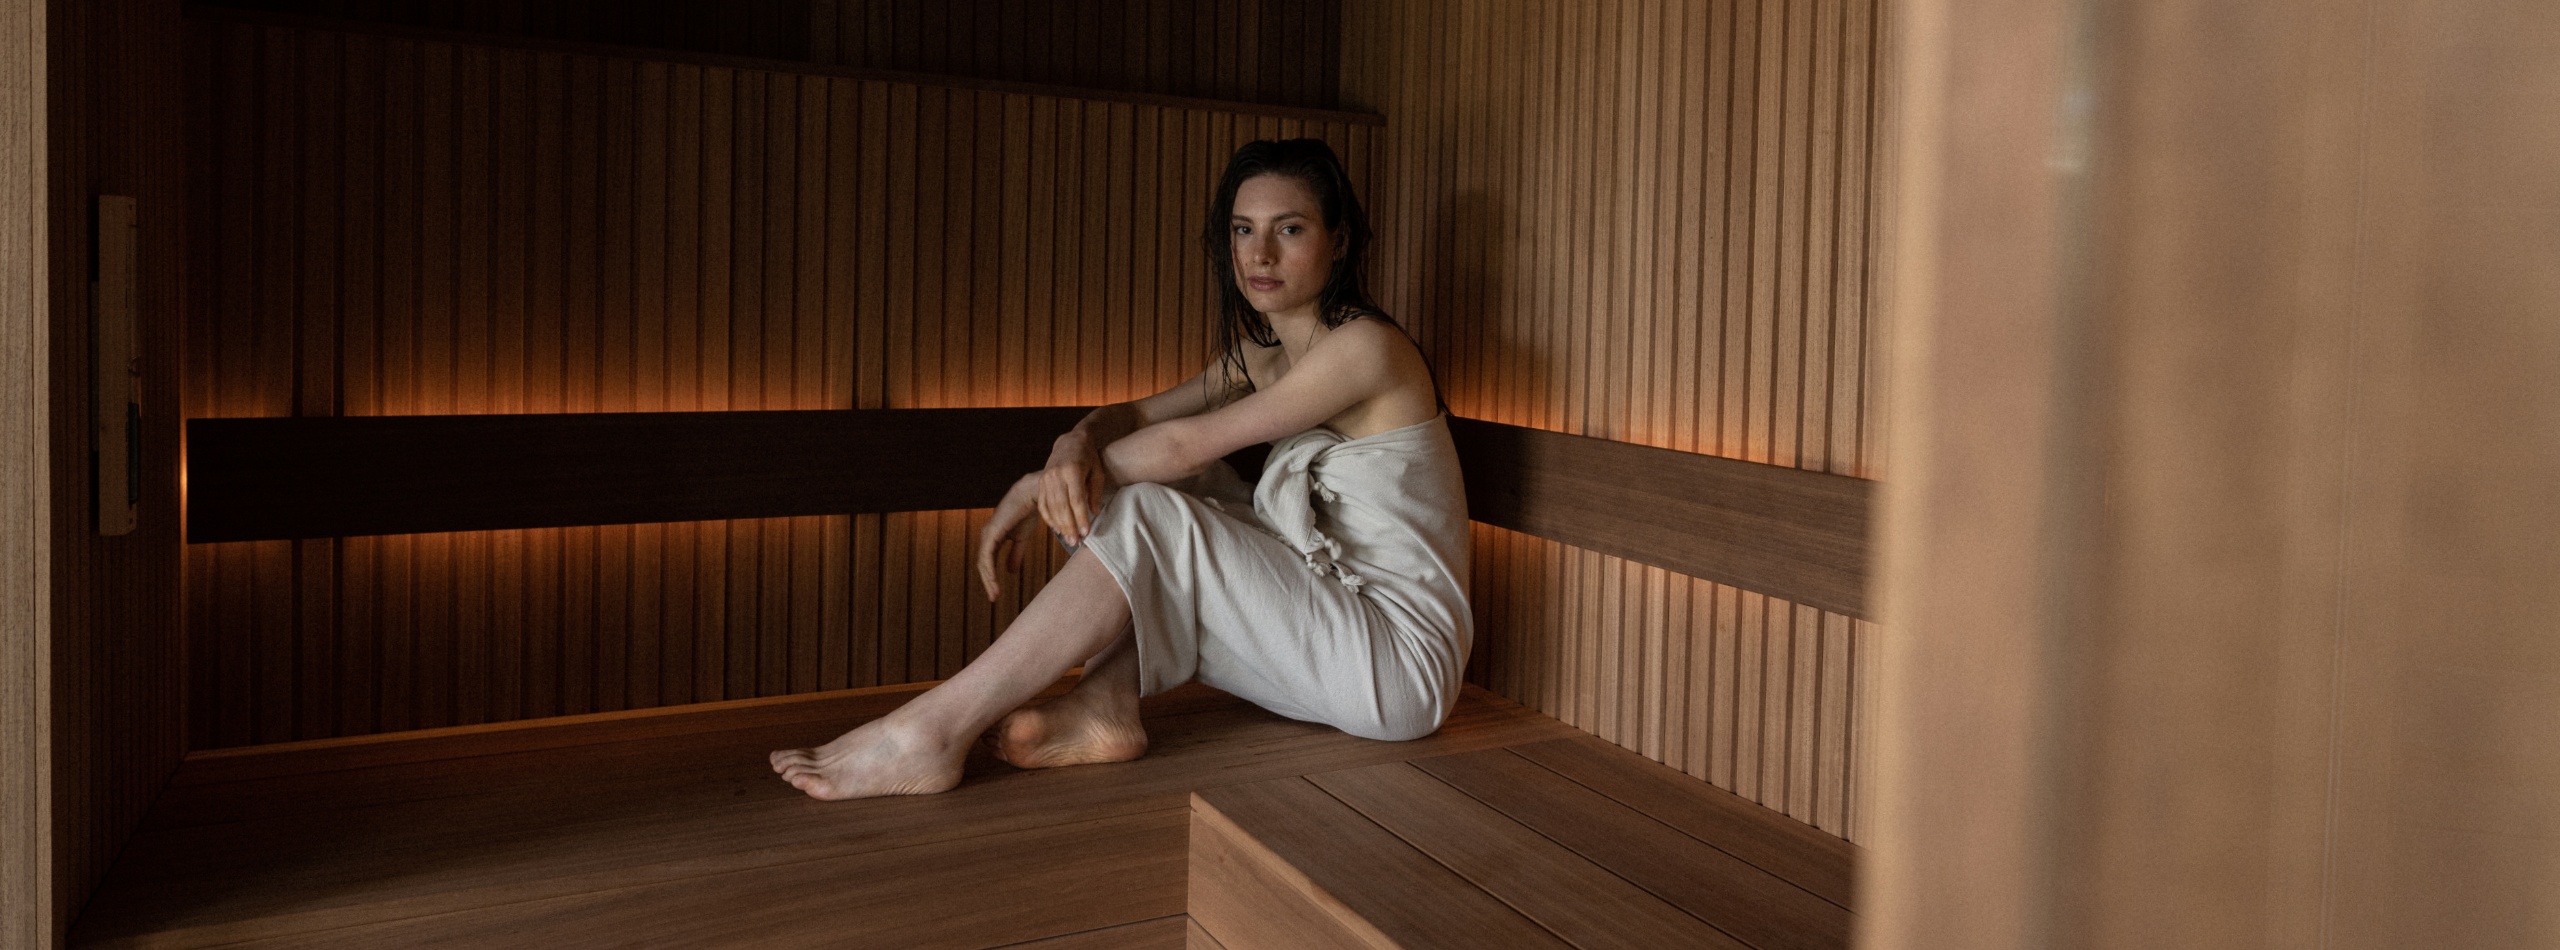 honing steek klei Finse sauna kopen | Welson | Exclusief en op maat